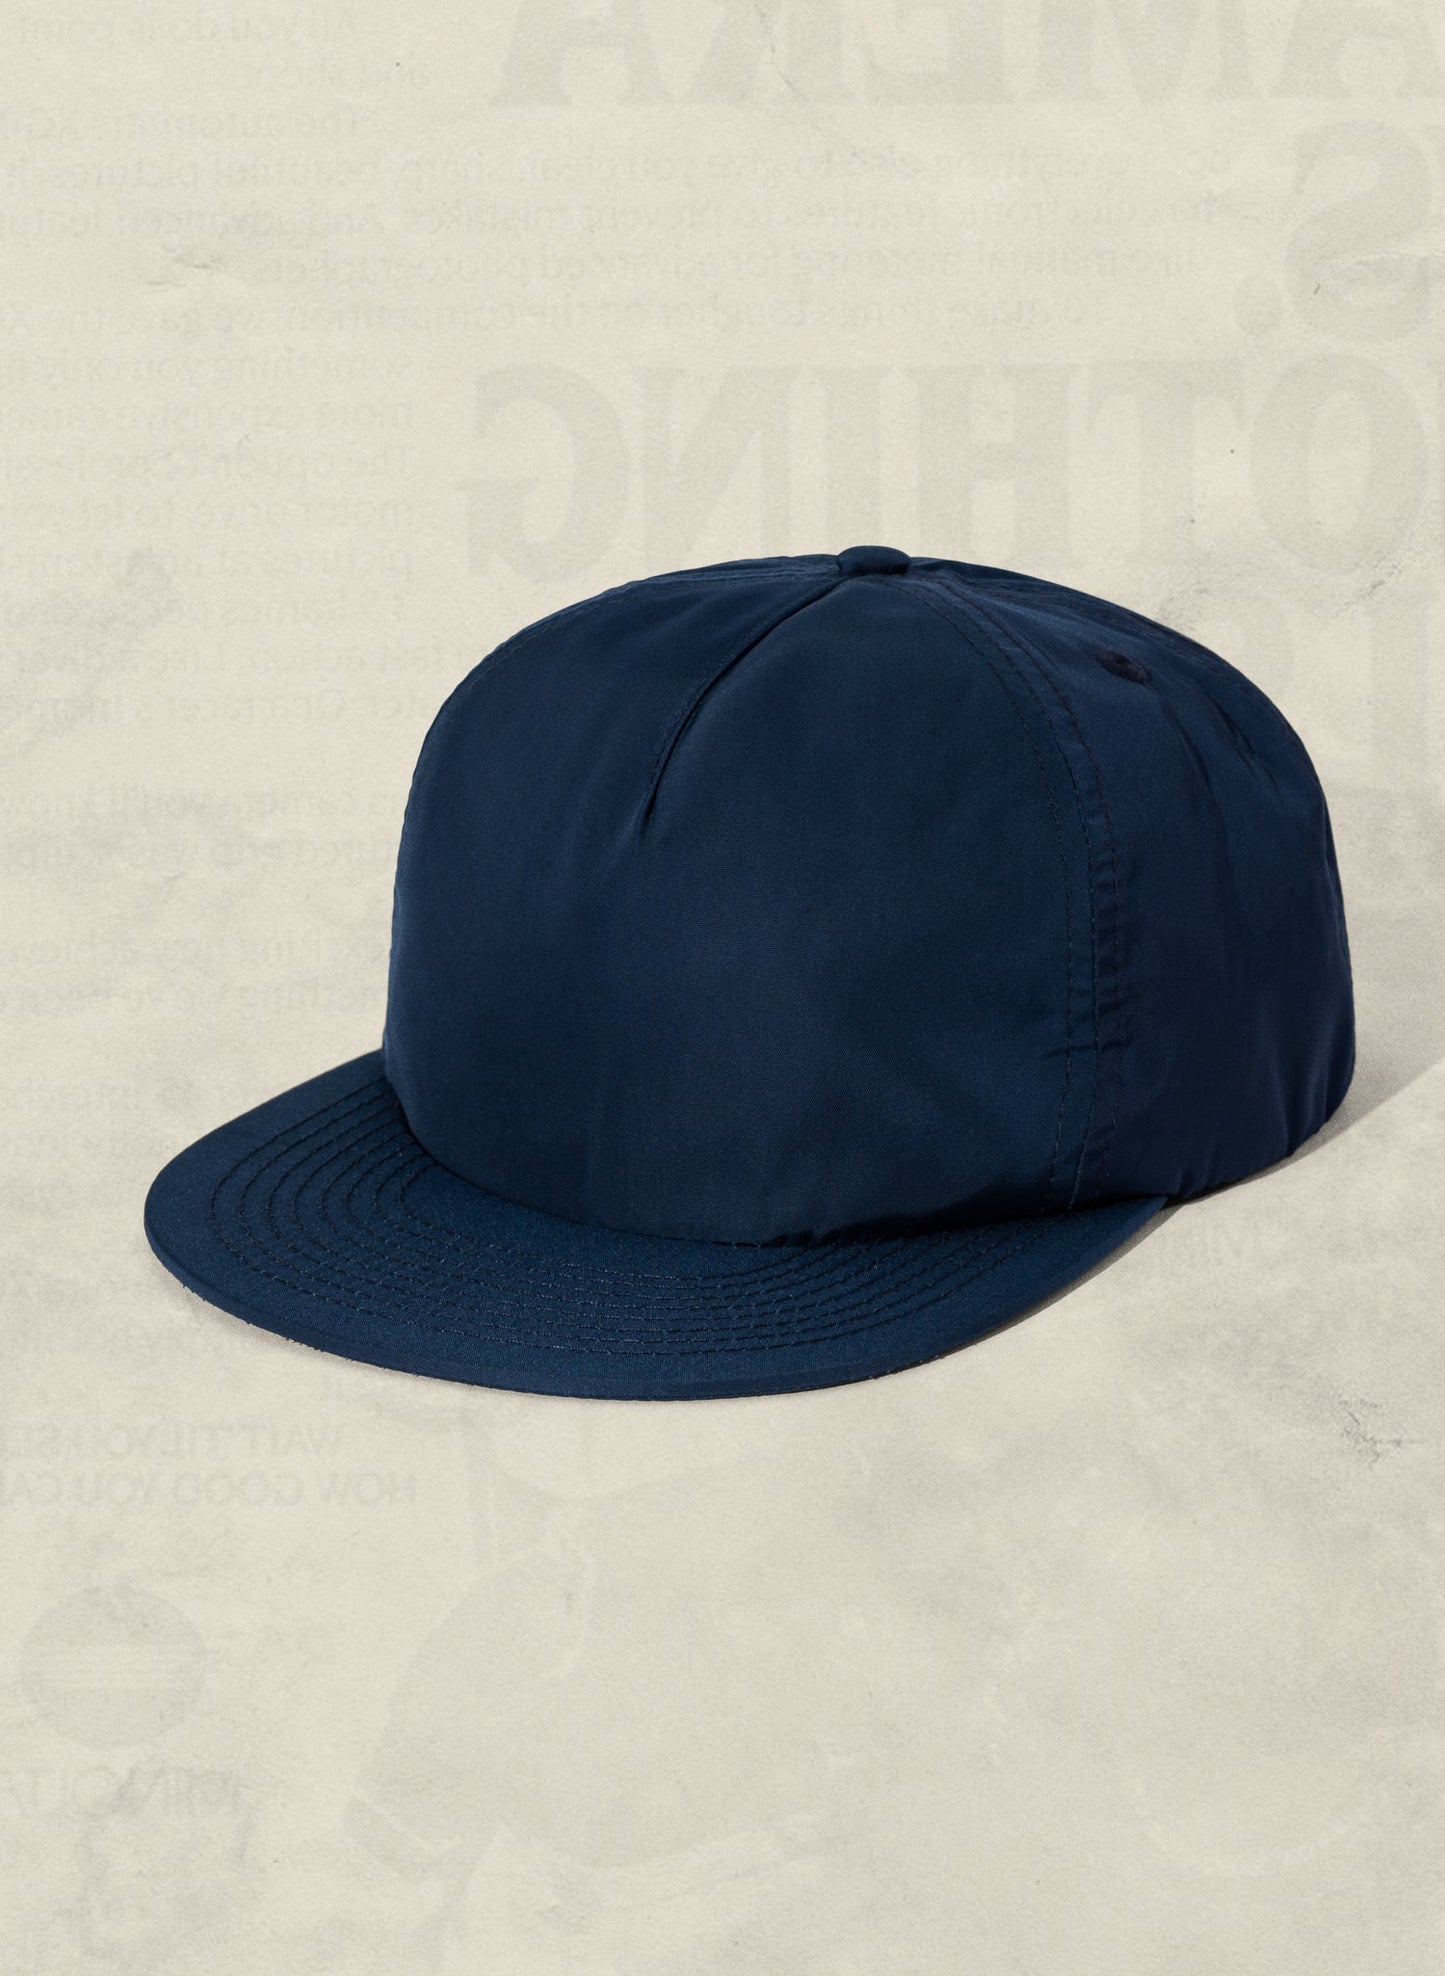 Weld Mfg Nylon Unstructured 5 Panel Vintage Inspired Baseball Strapback Hat - Laid Back Headwear - Navy